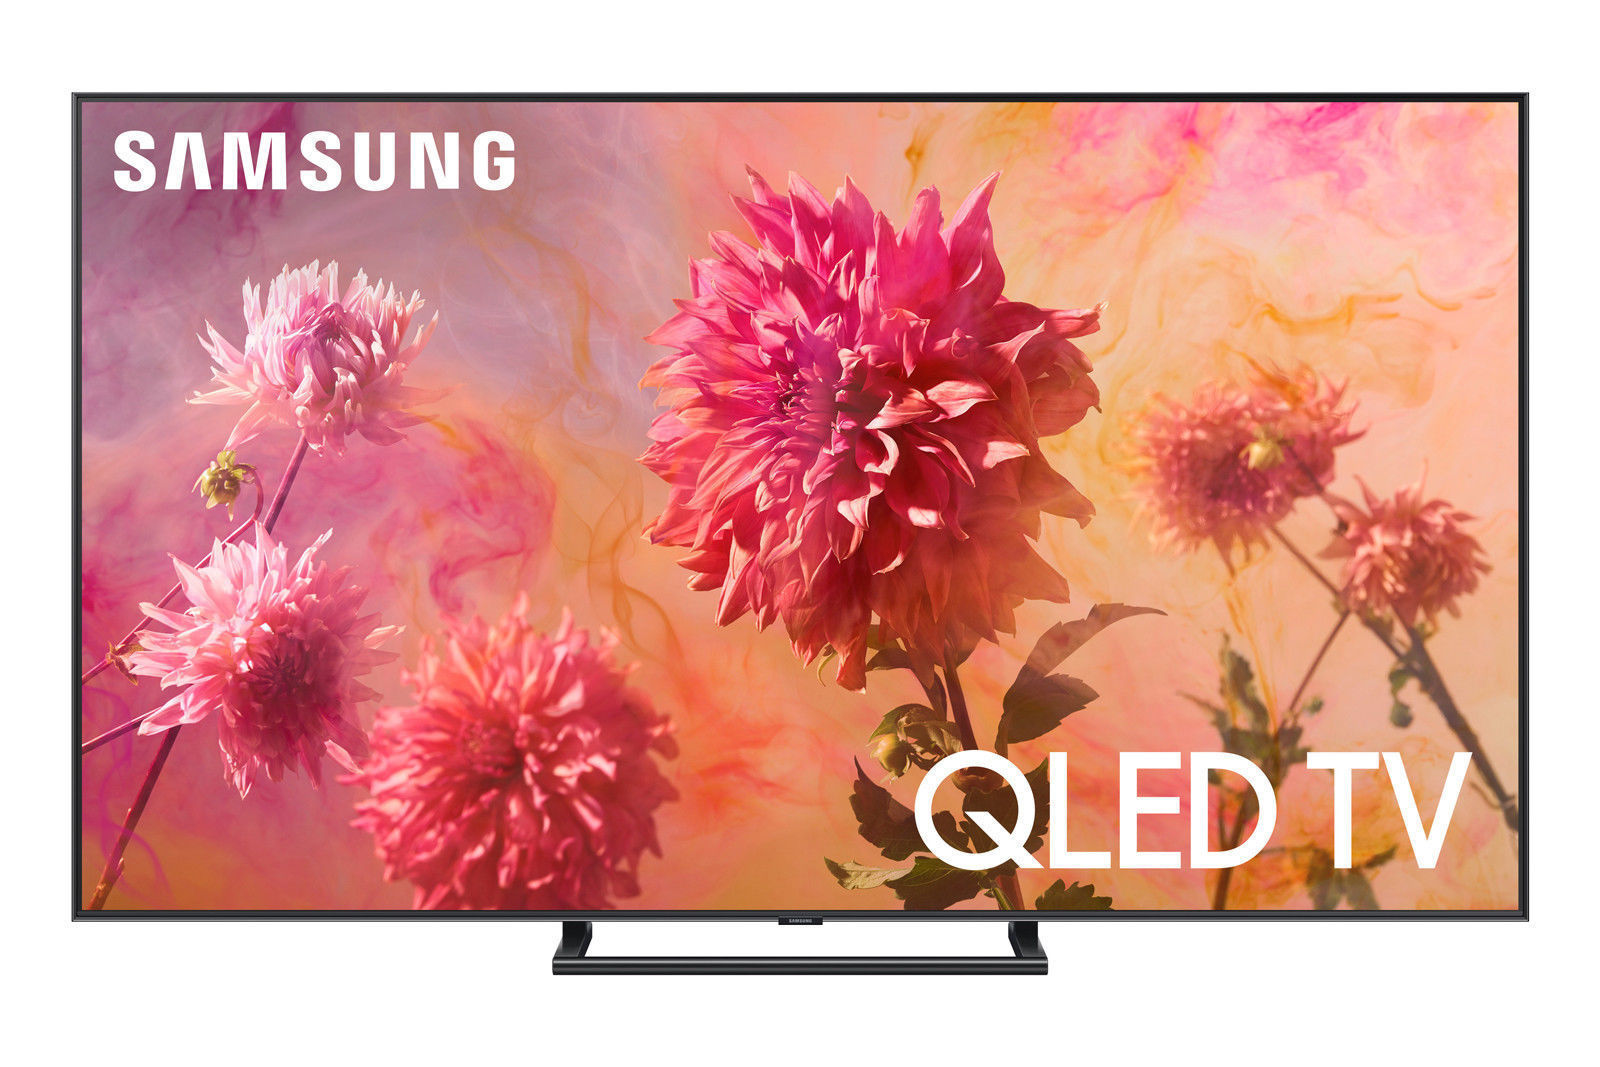 Samsung QN65Q9FN 2018 65″ Smart Q LED 4K Ultra HD TV with HDR QLED